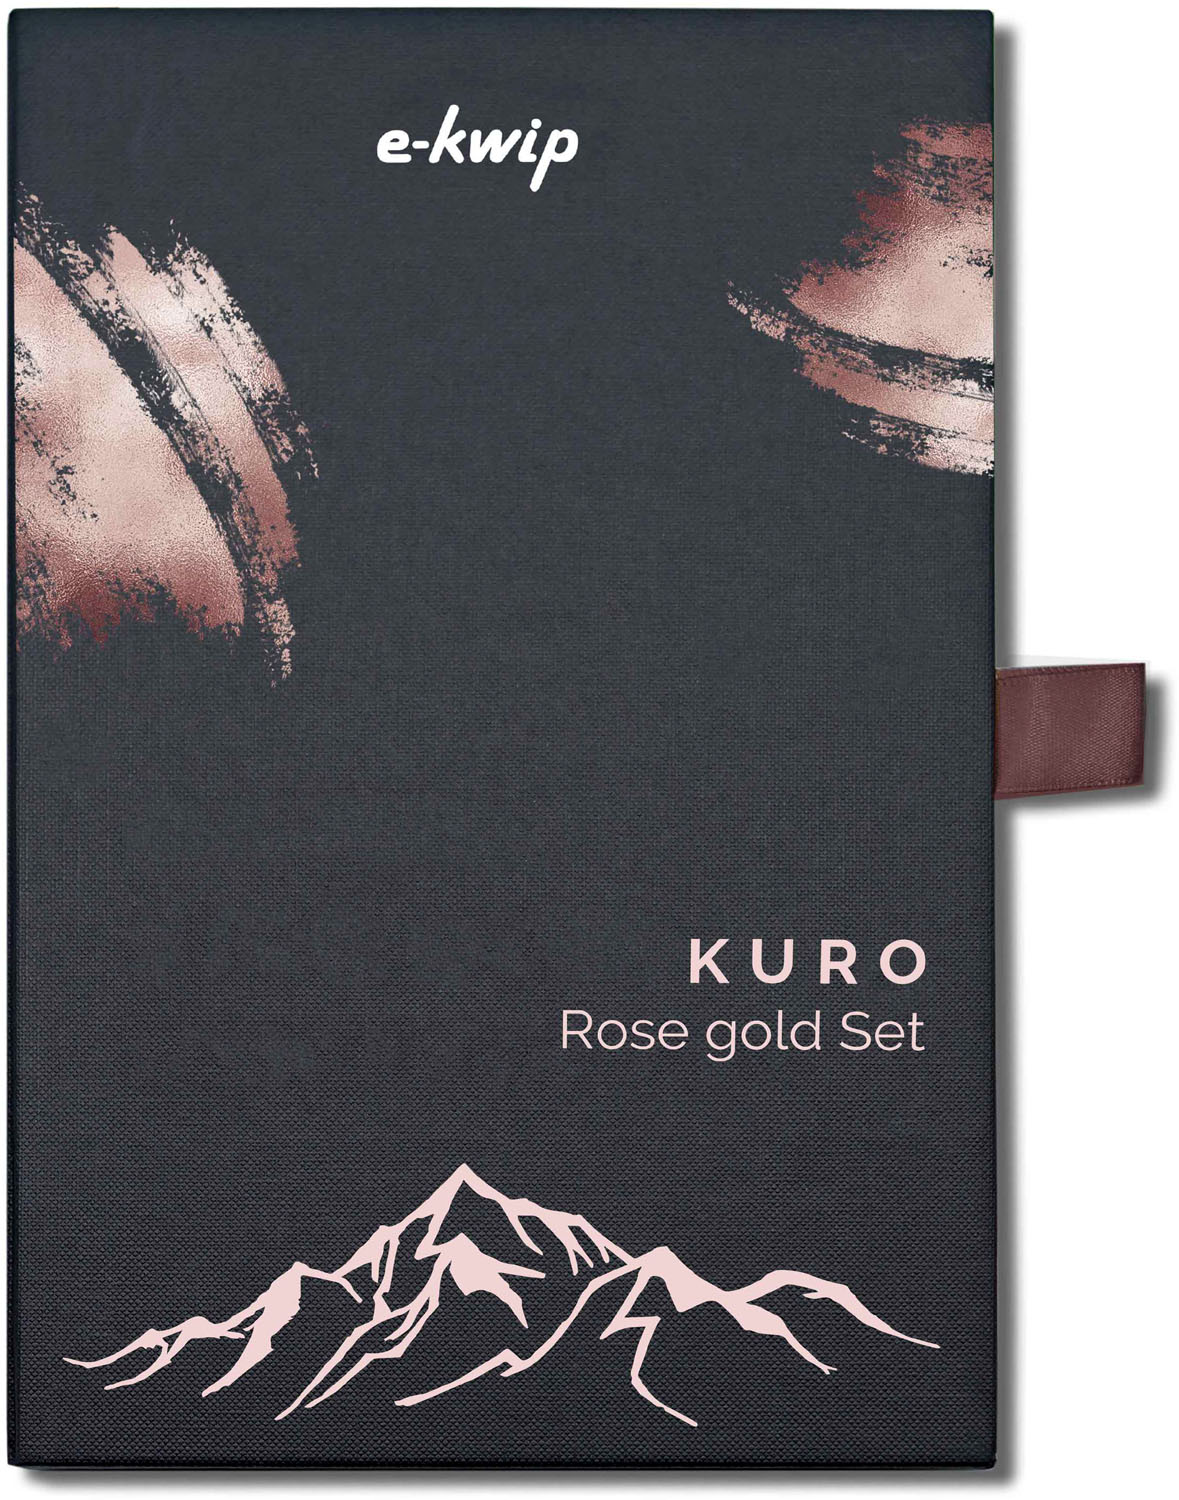  e-kwip Kuro Set Rosegold KU-55 & KU-40 